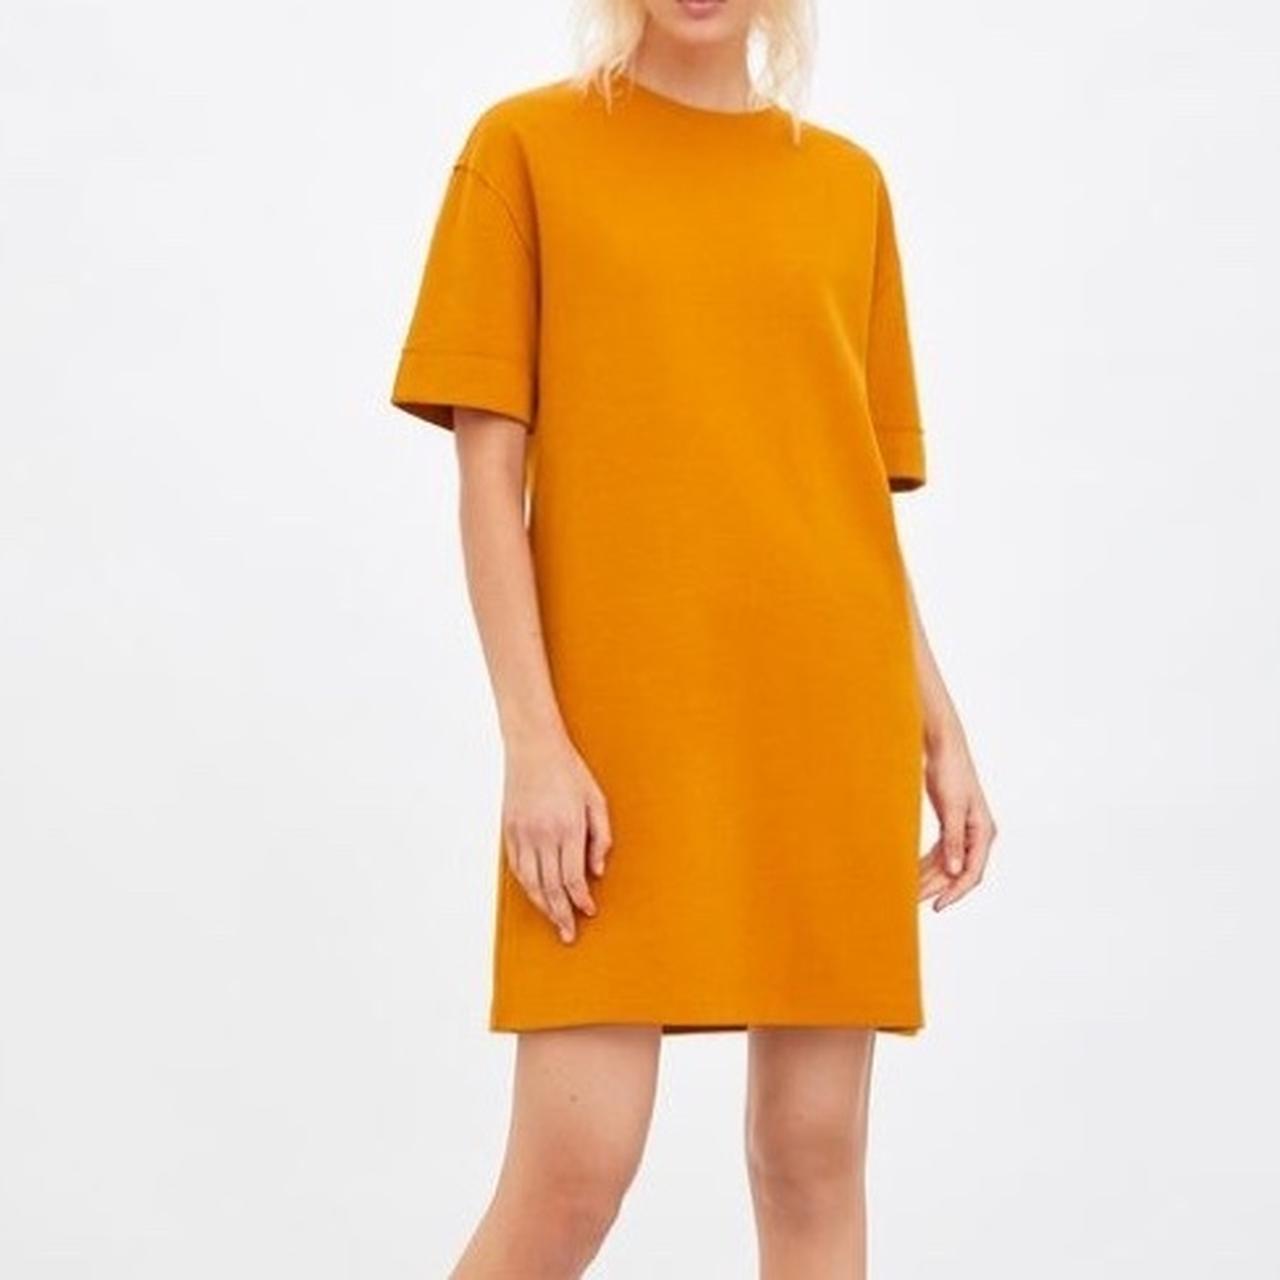 Mustard orange t shirt dress Zara size ...